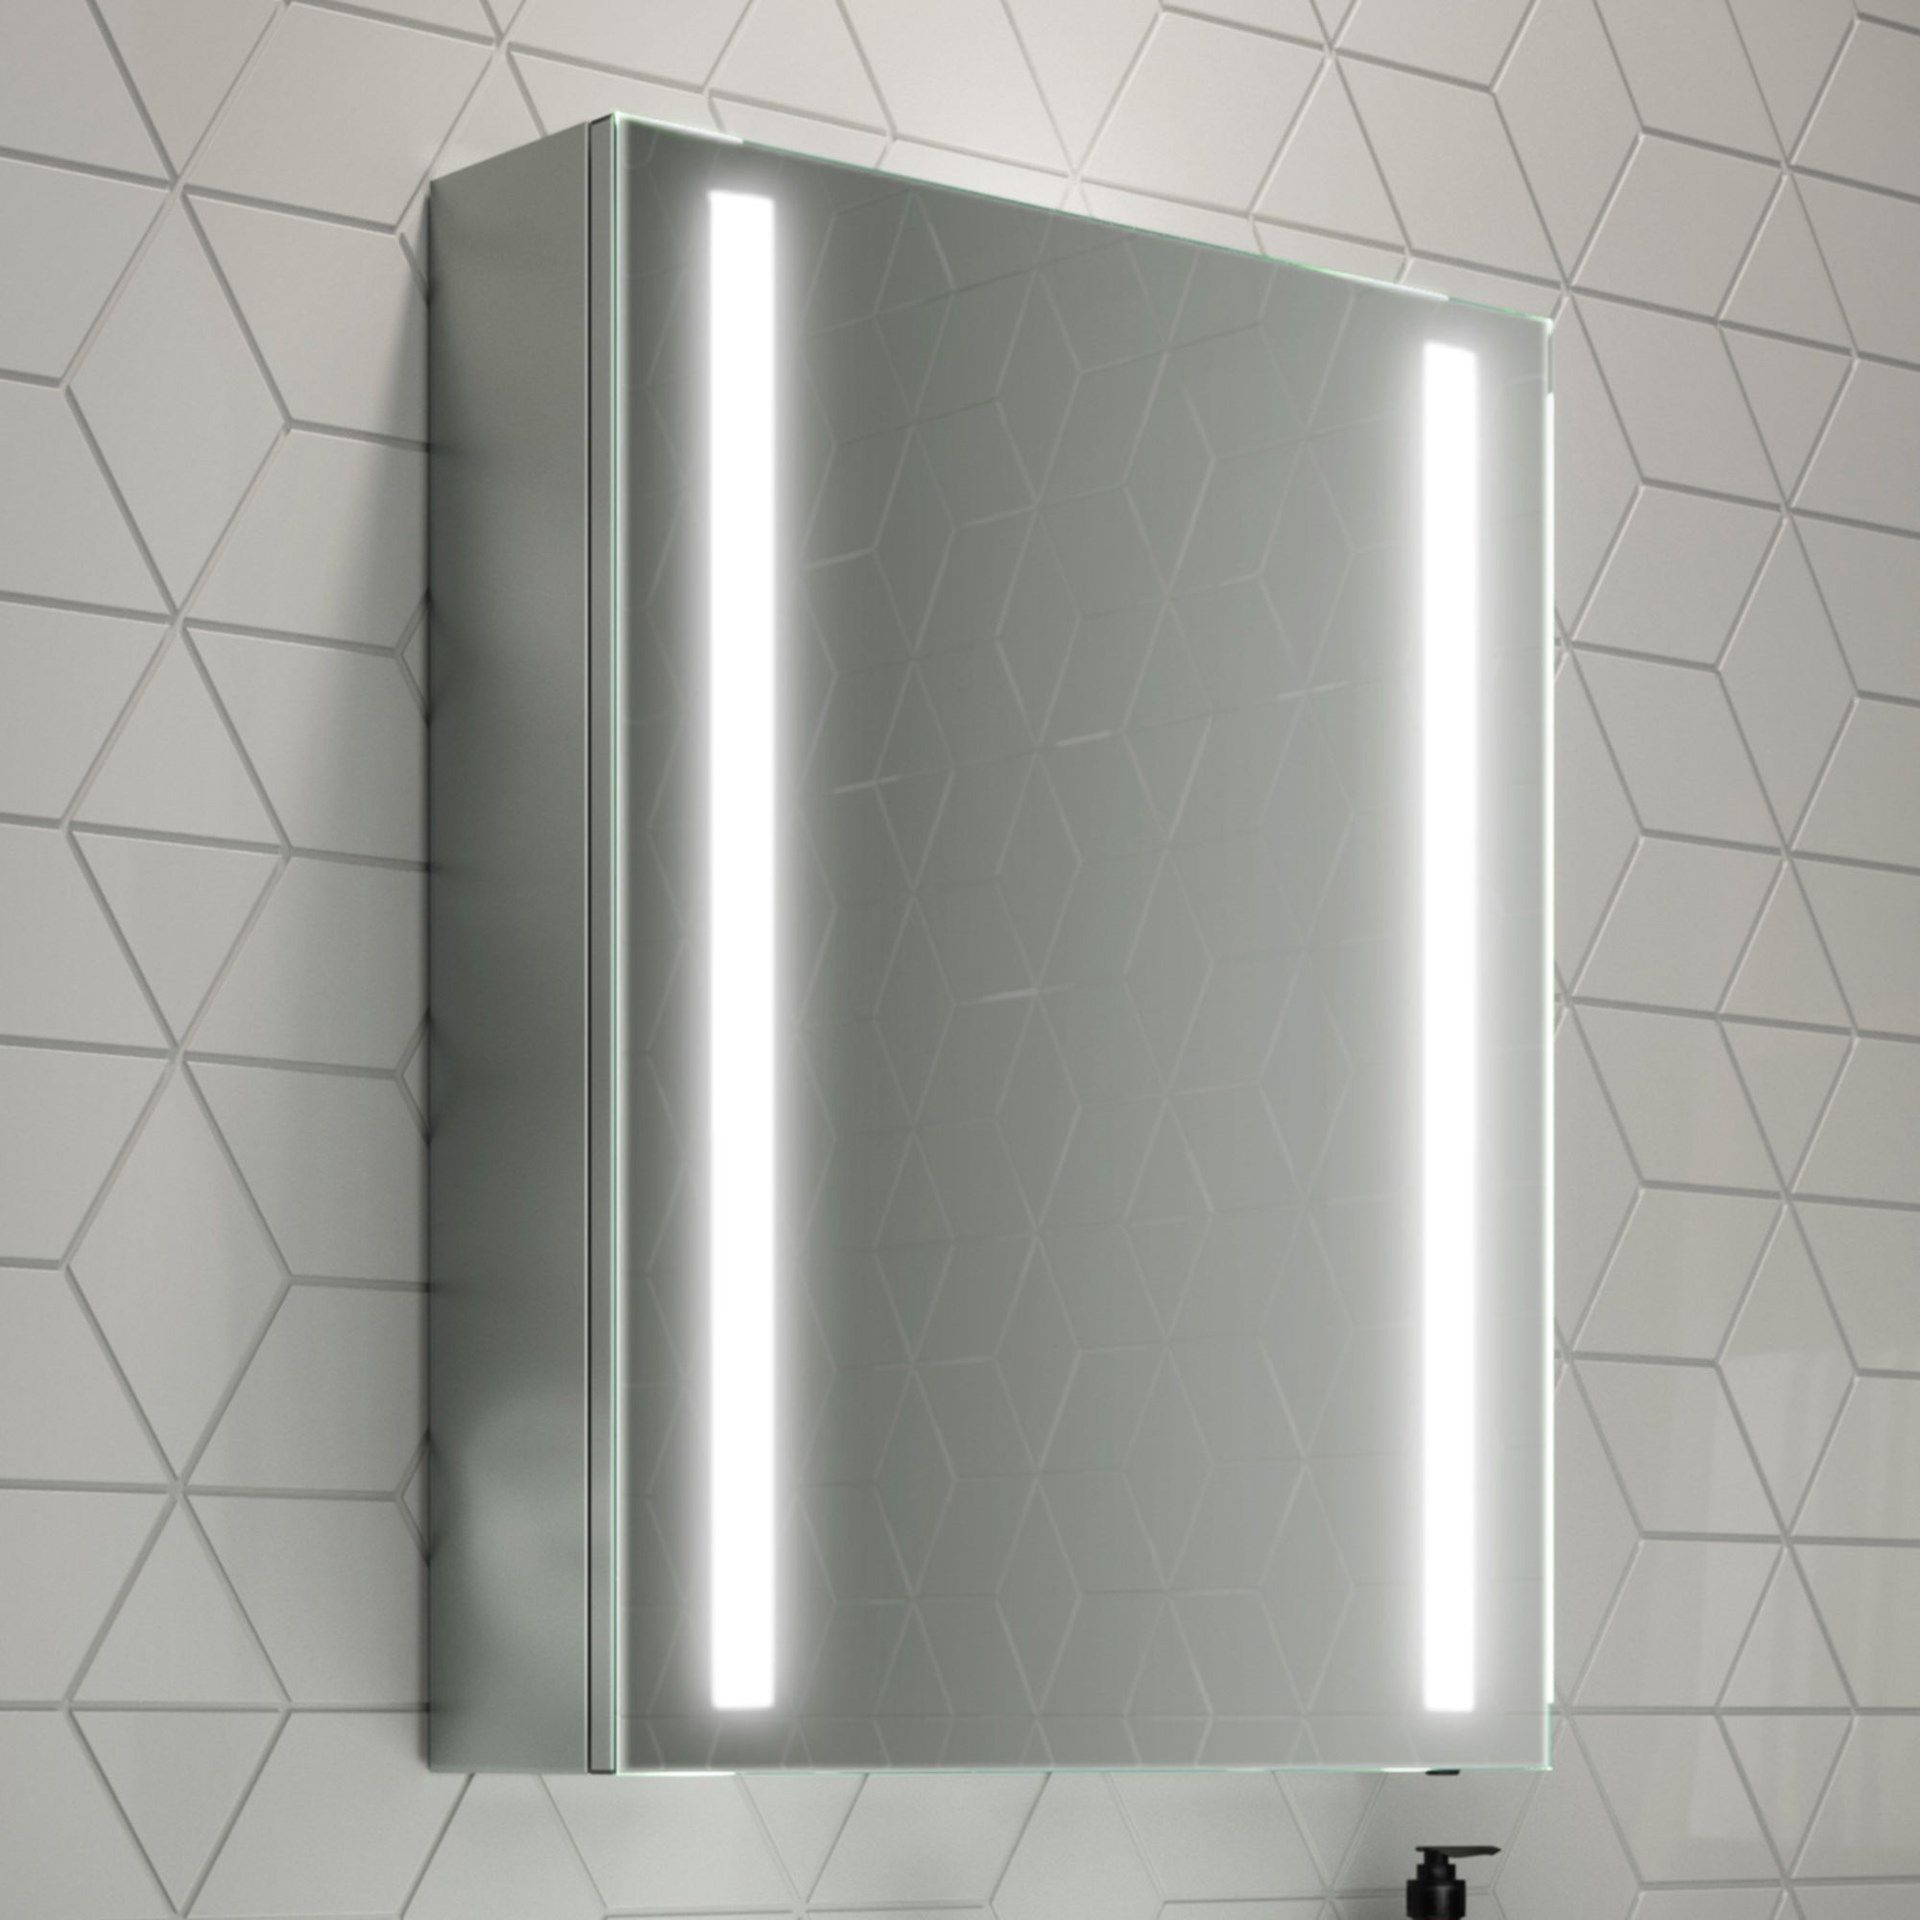 (OS24) 500x650mm Dawn Illuminated LED Mirror Cabinet. RRP £499.99. Energy efficient LED lighti...